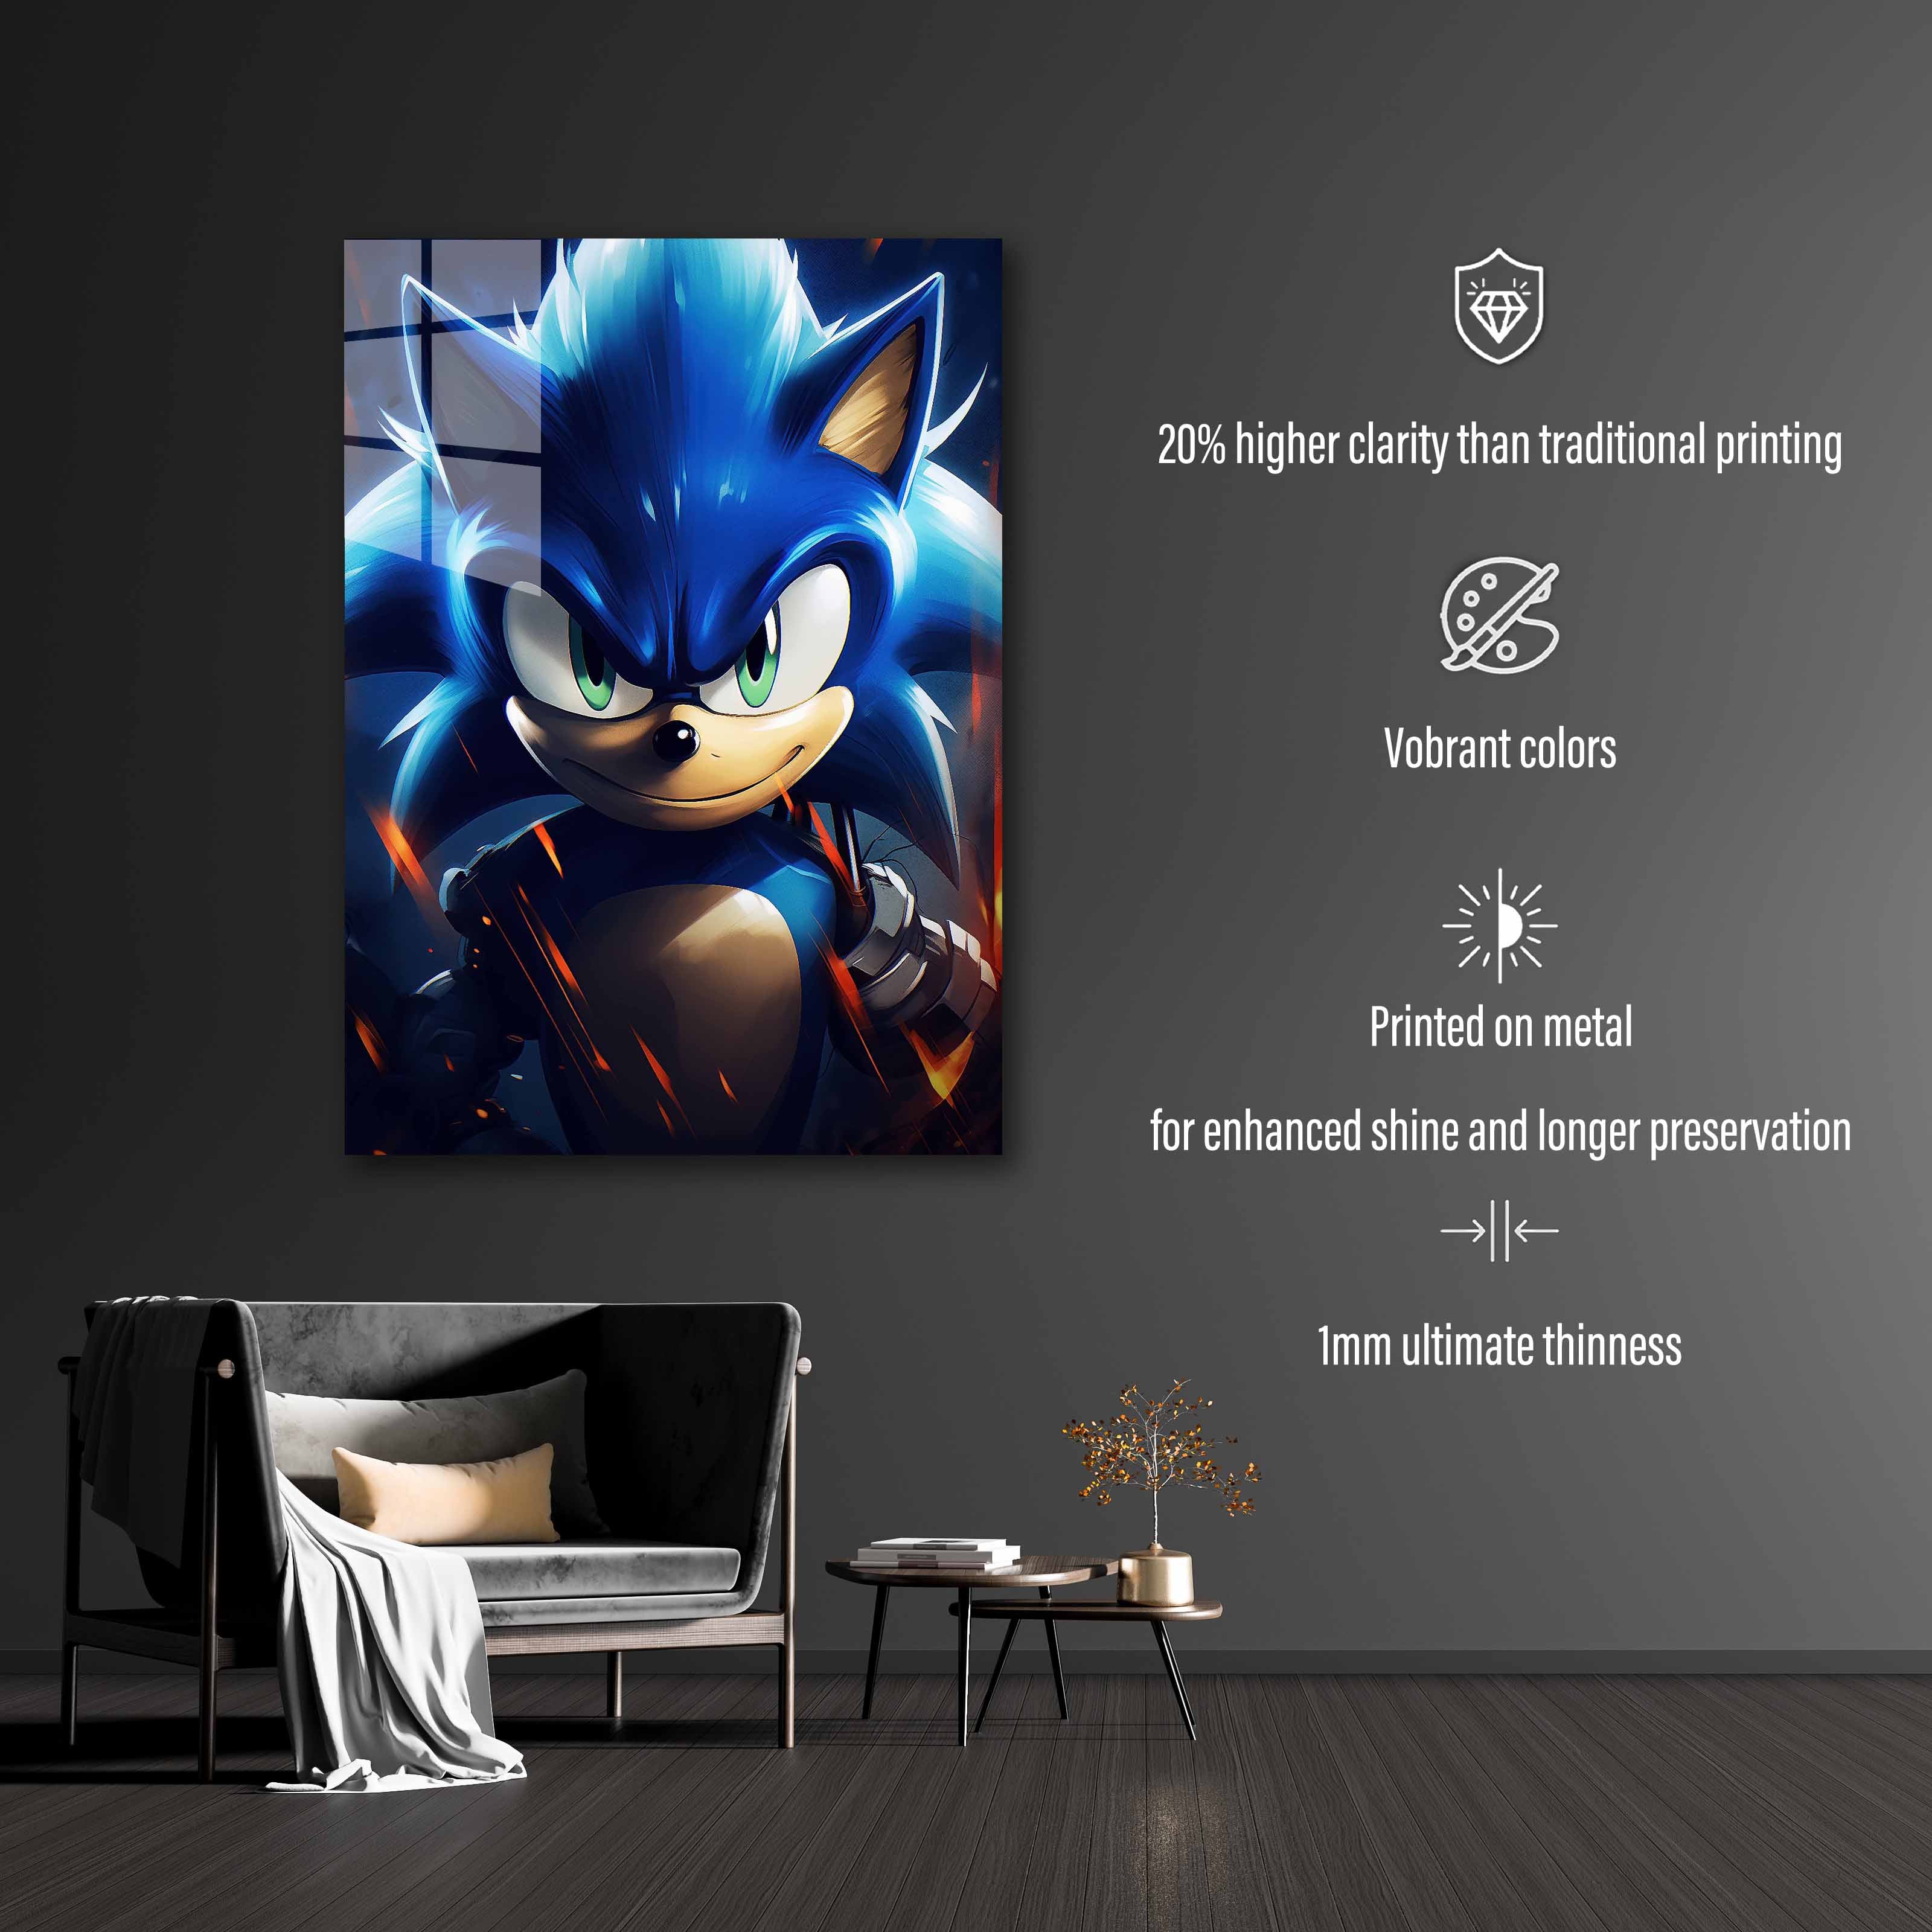 Sonic The Hedgehog 6-designed by @SAMCRO